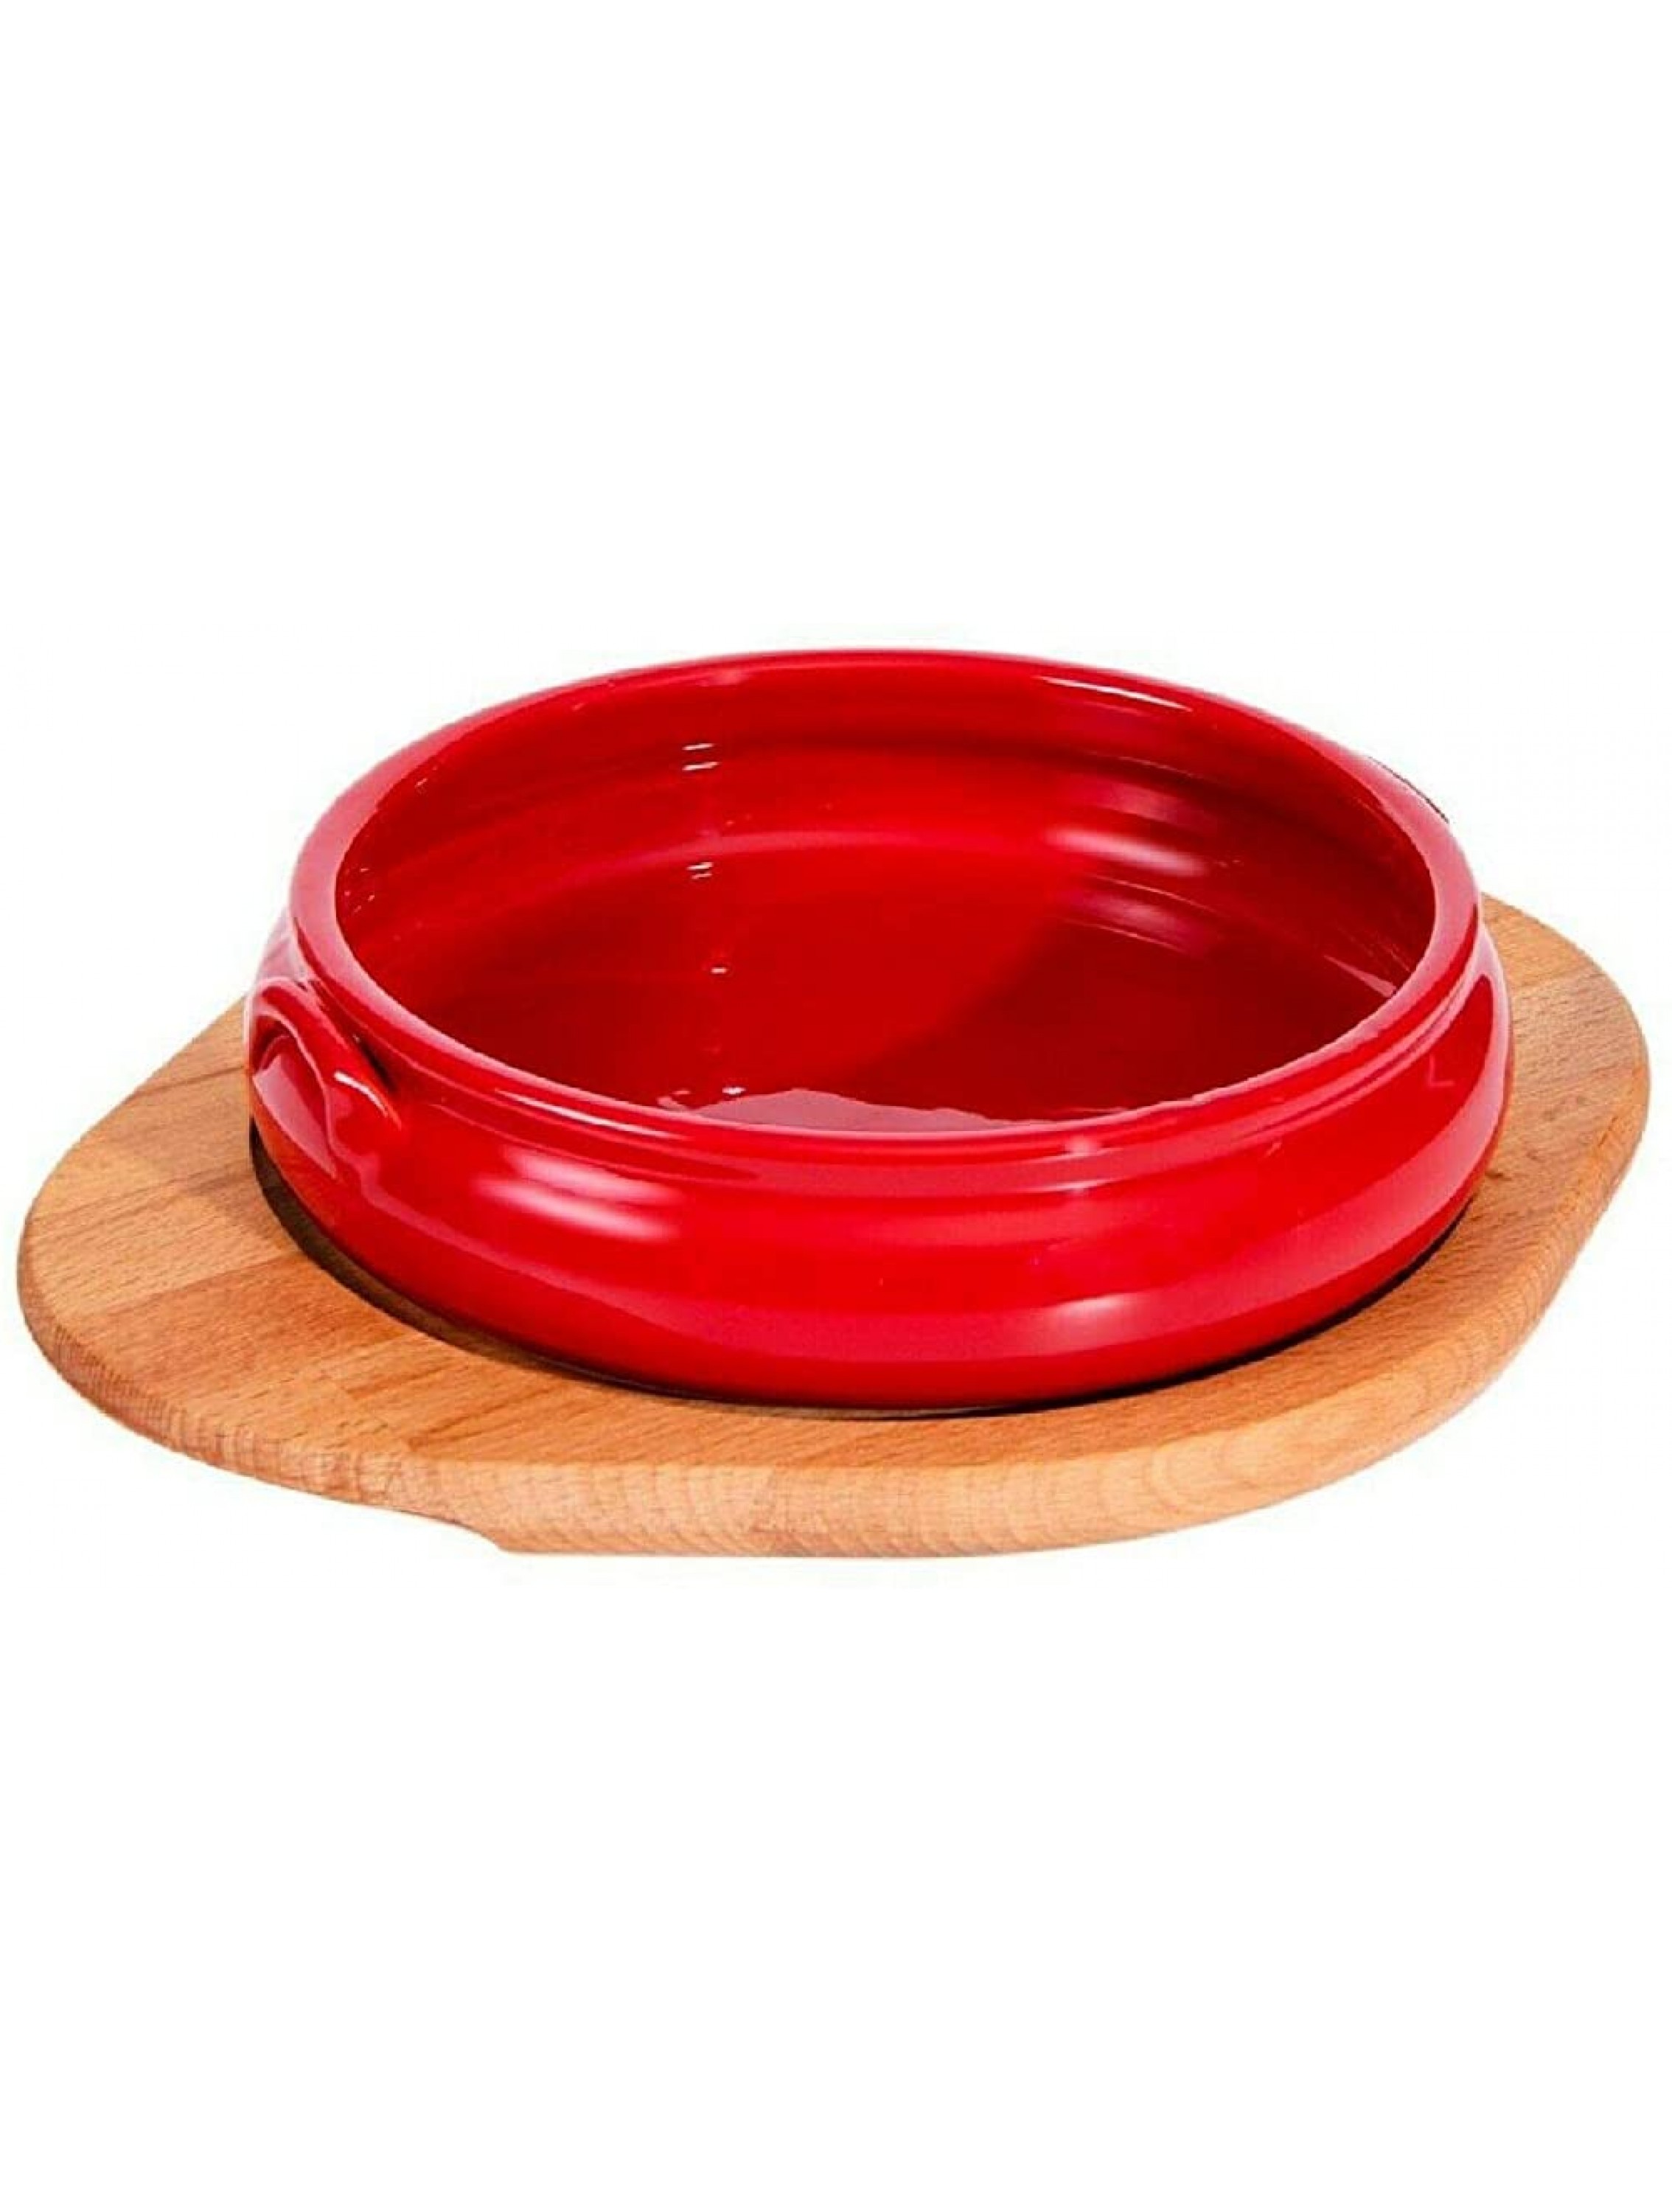 497 Clay Meat Pan with Trivet Terracotta Paella Pan Red 8.8 Inch – WQ01 - B9SF3PEJD